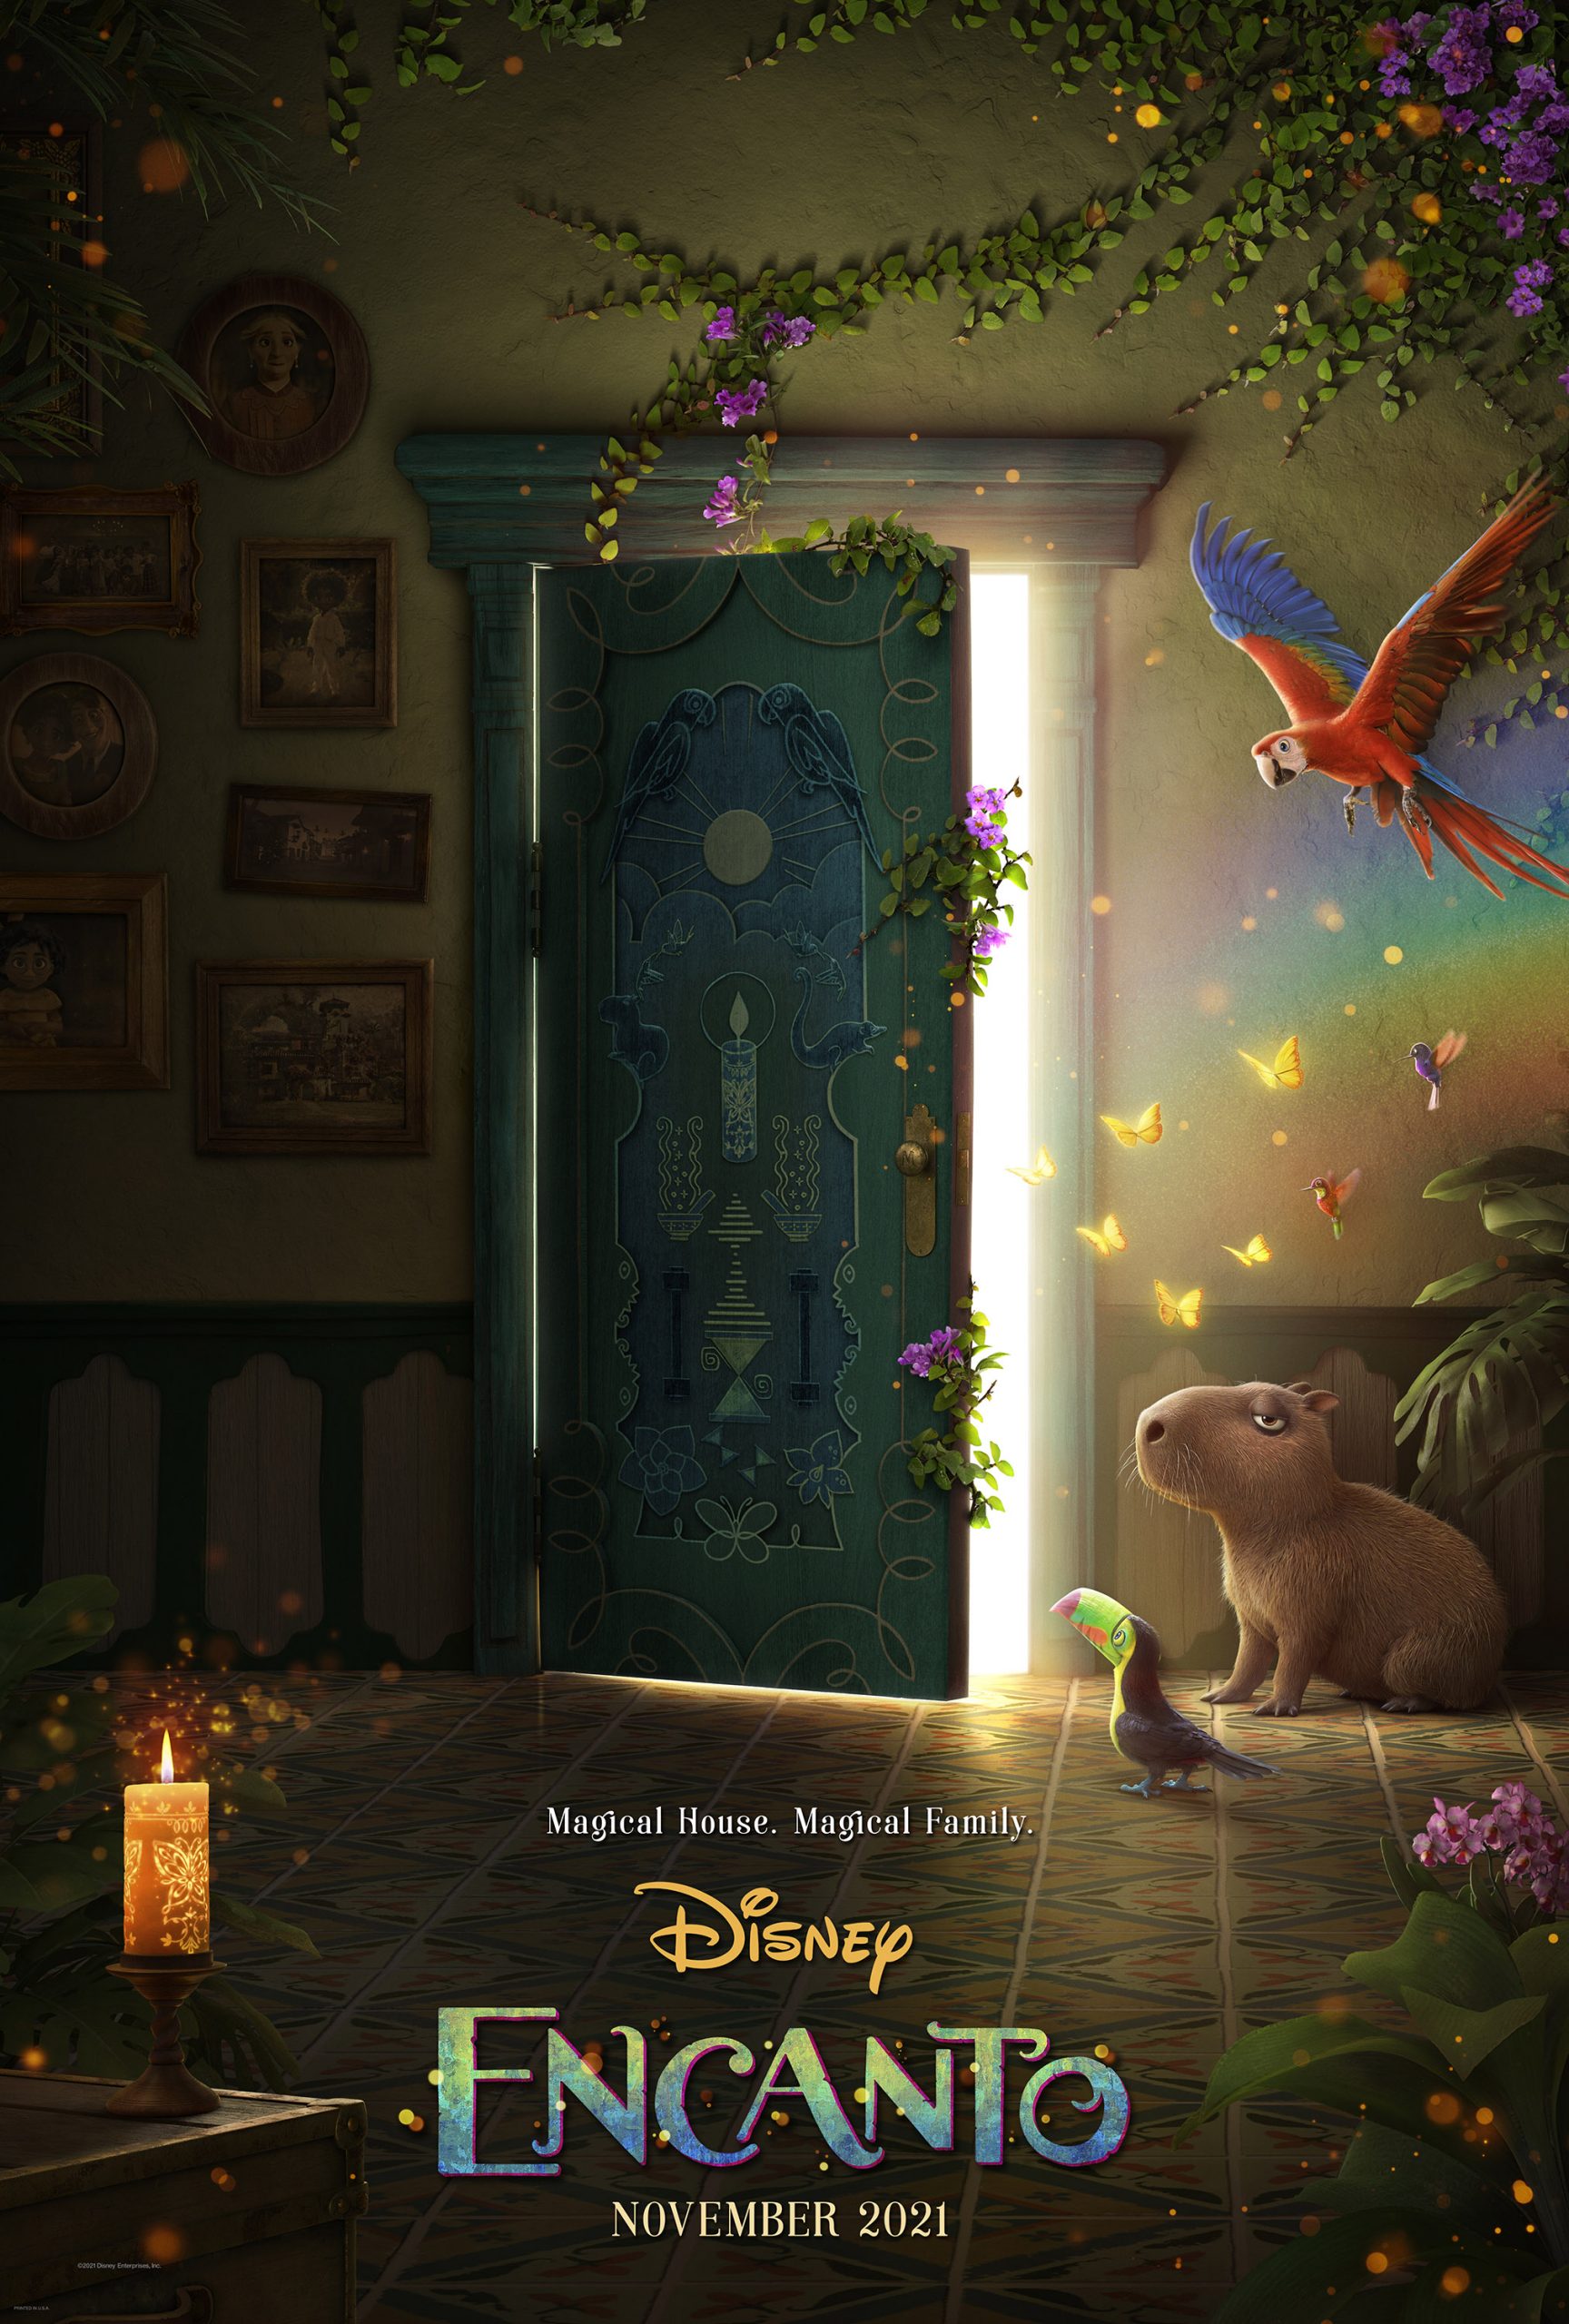 New Trailer and Poster for Walt Disney Animation Studios "Encanto"